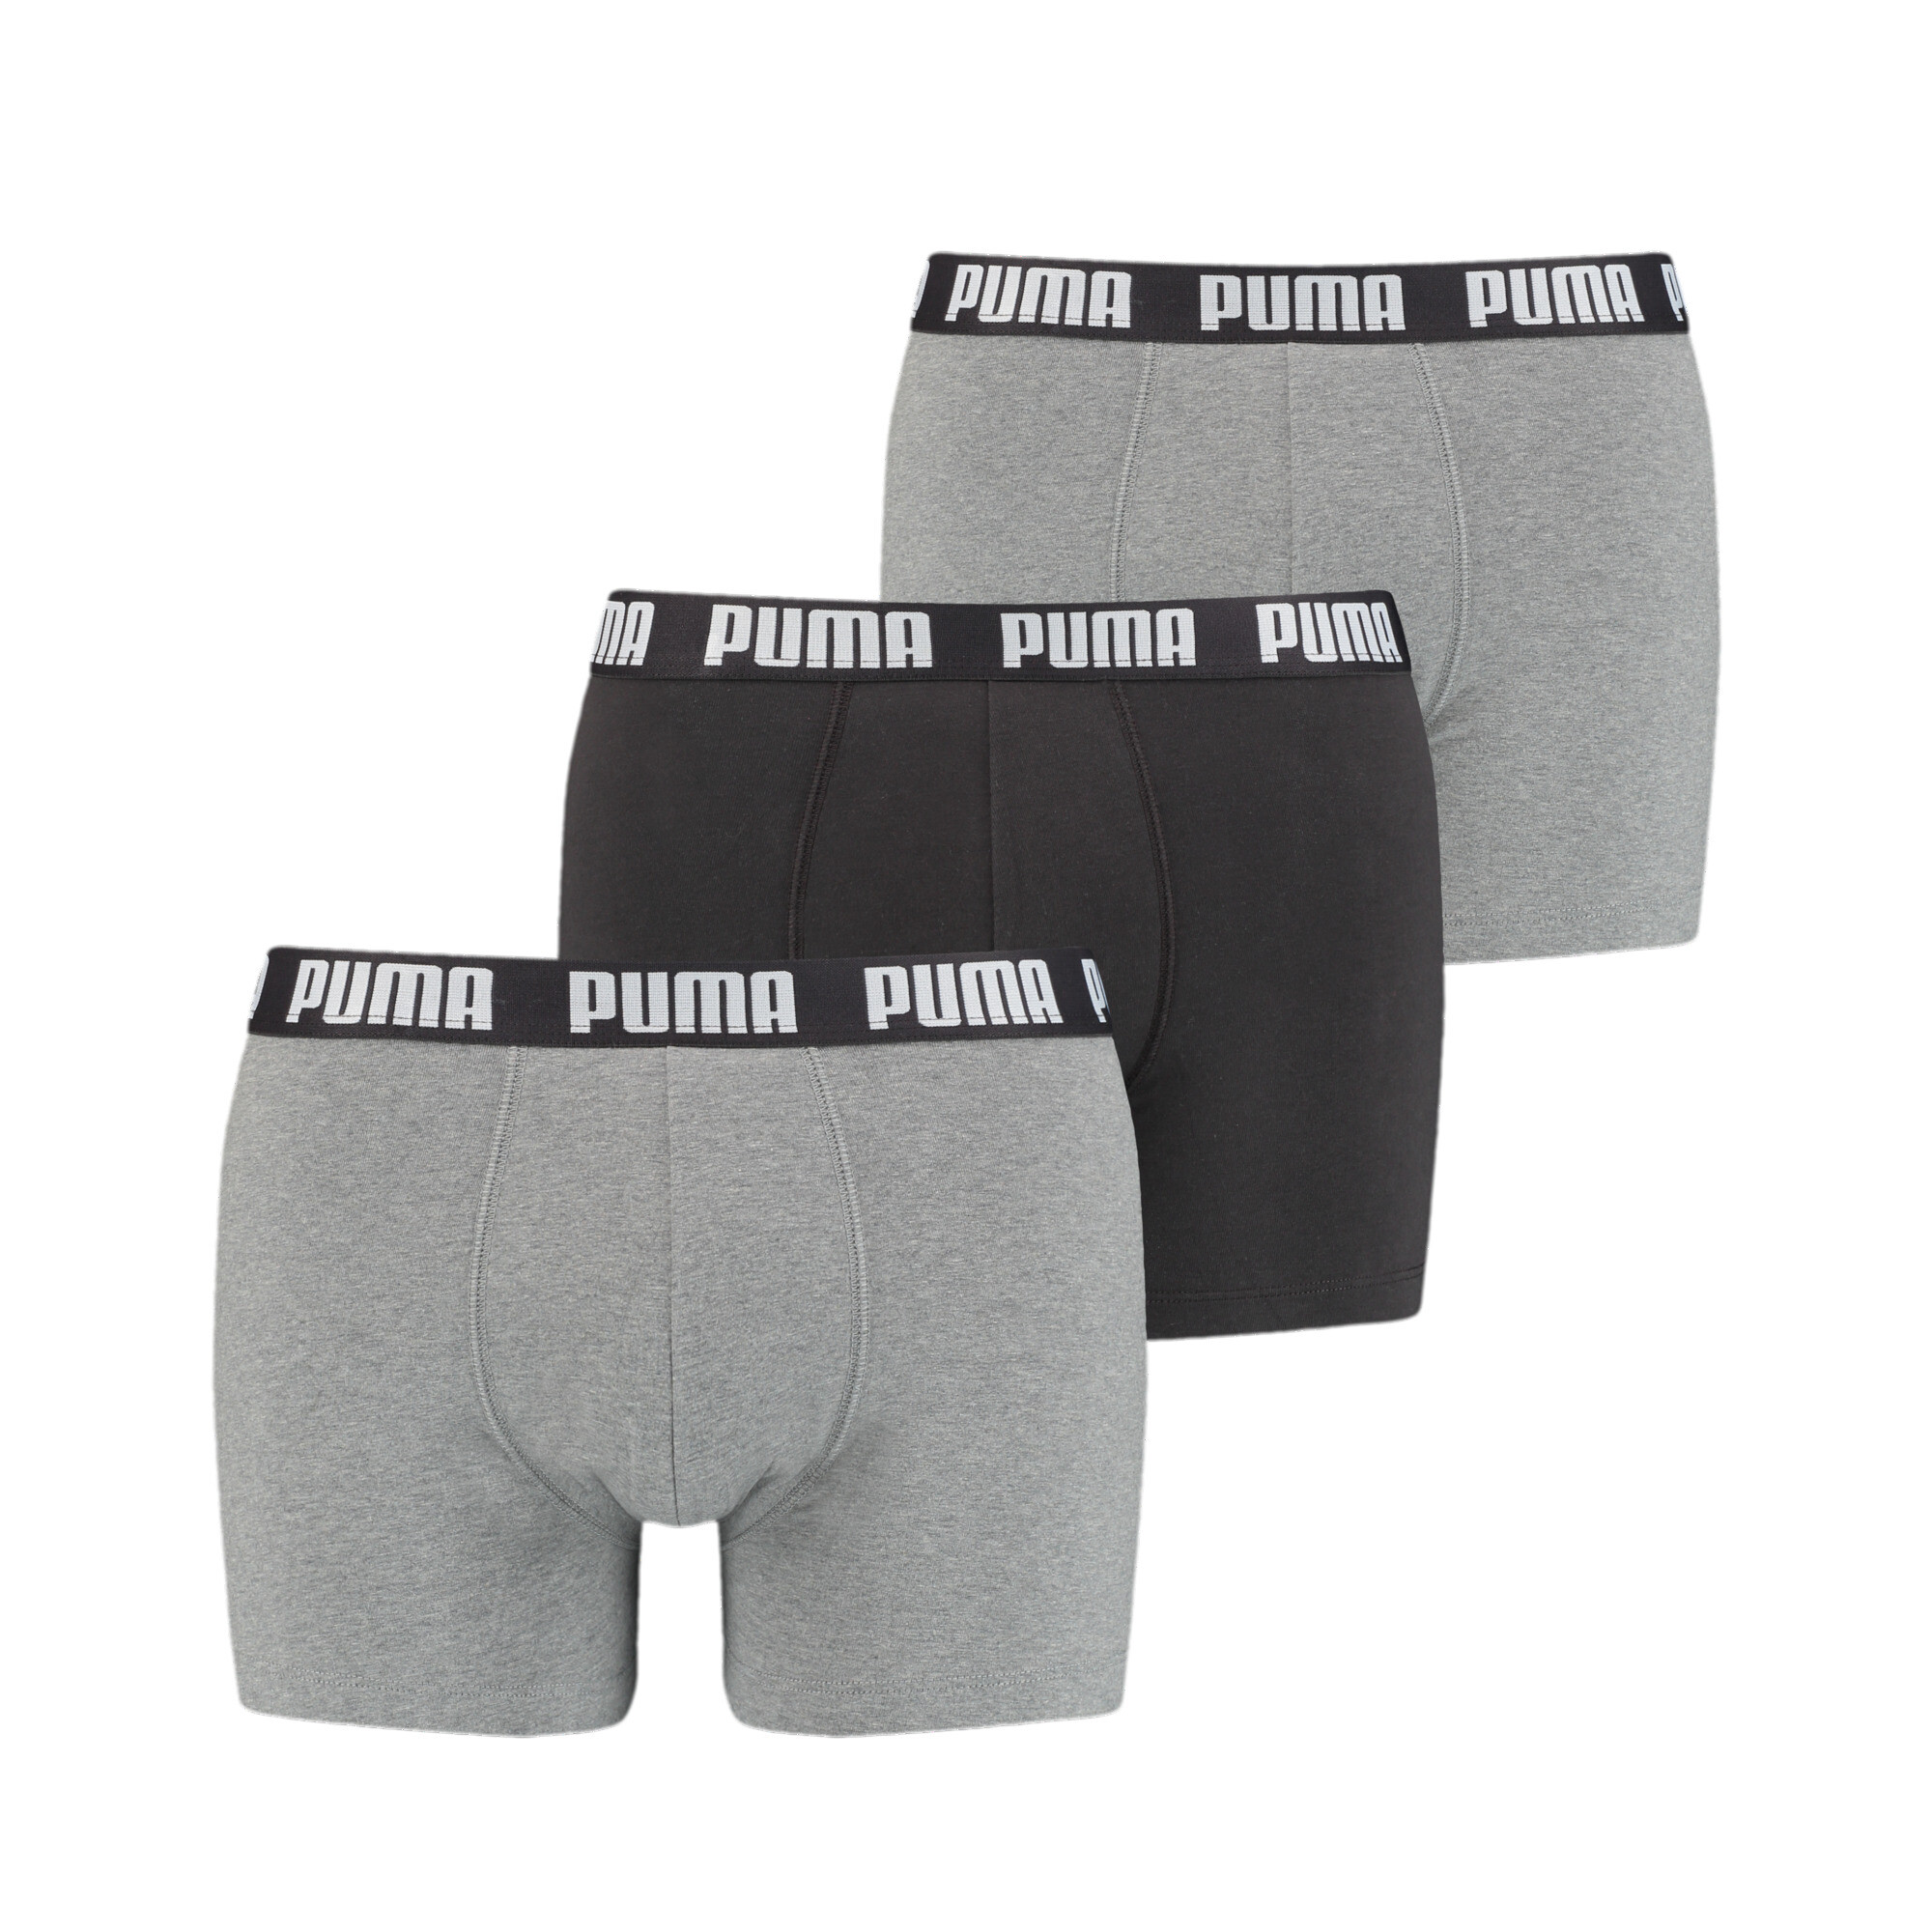 Men's PUMA Everyday Boxers 3 Pack In Black Grey Combo, Size Medium